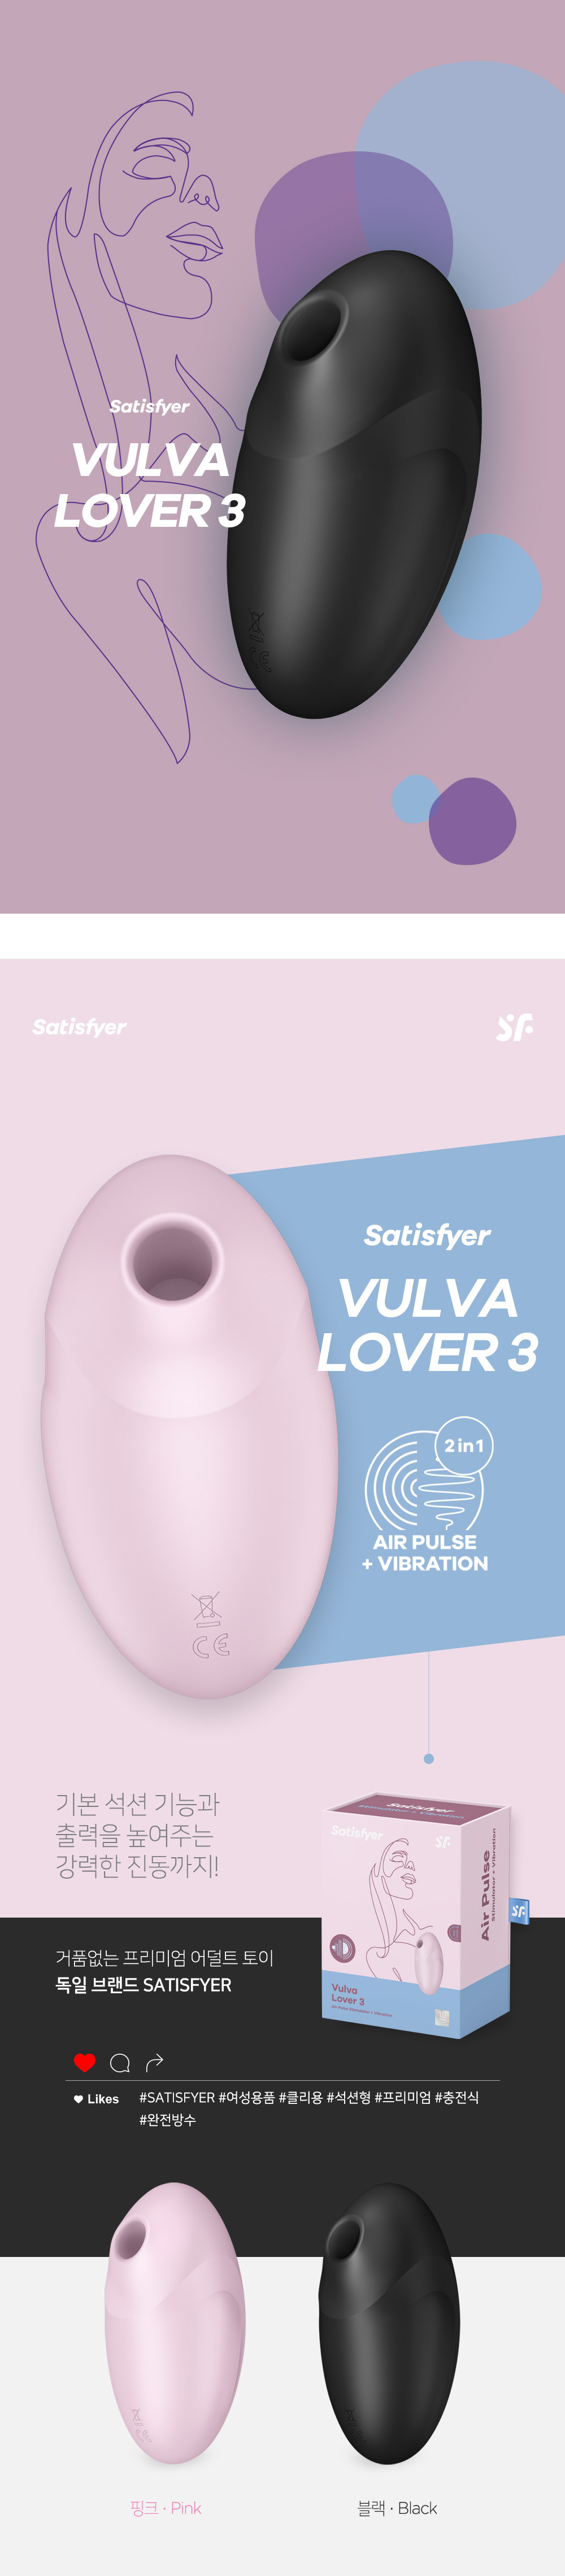 VULVA LOVER 3 (2 COLOR)